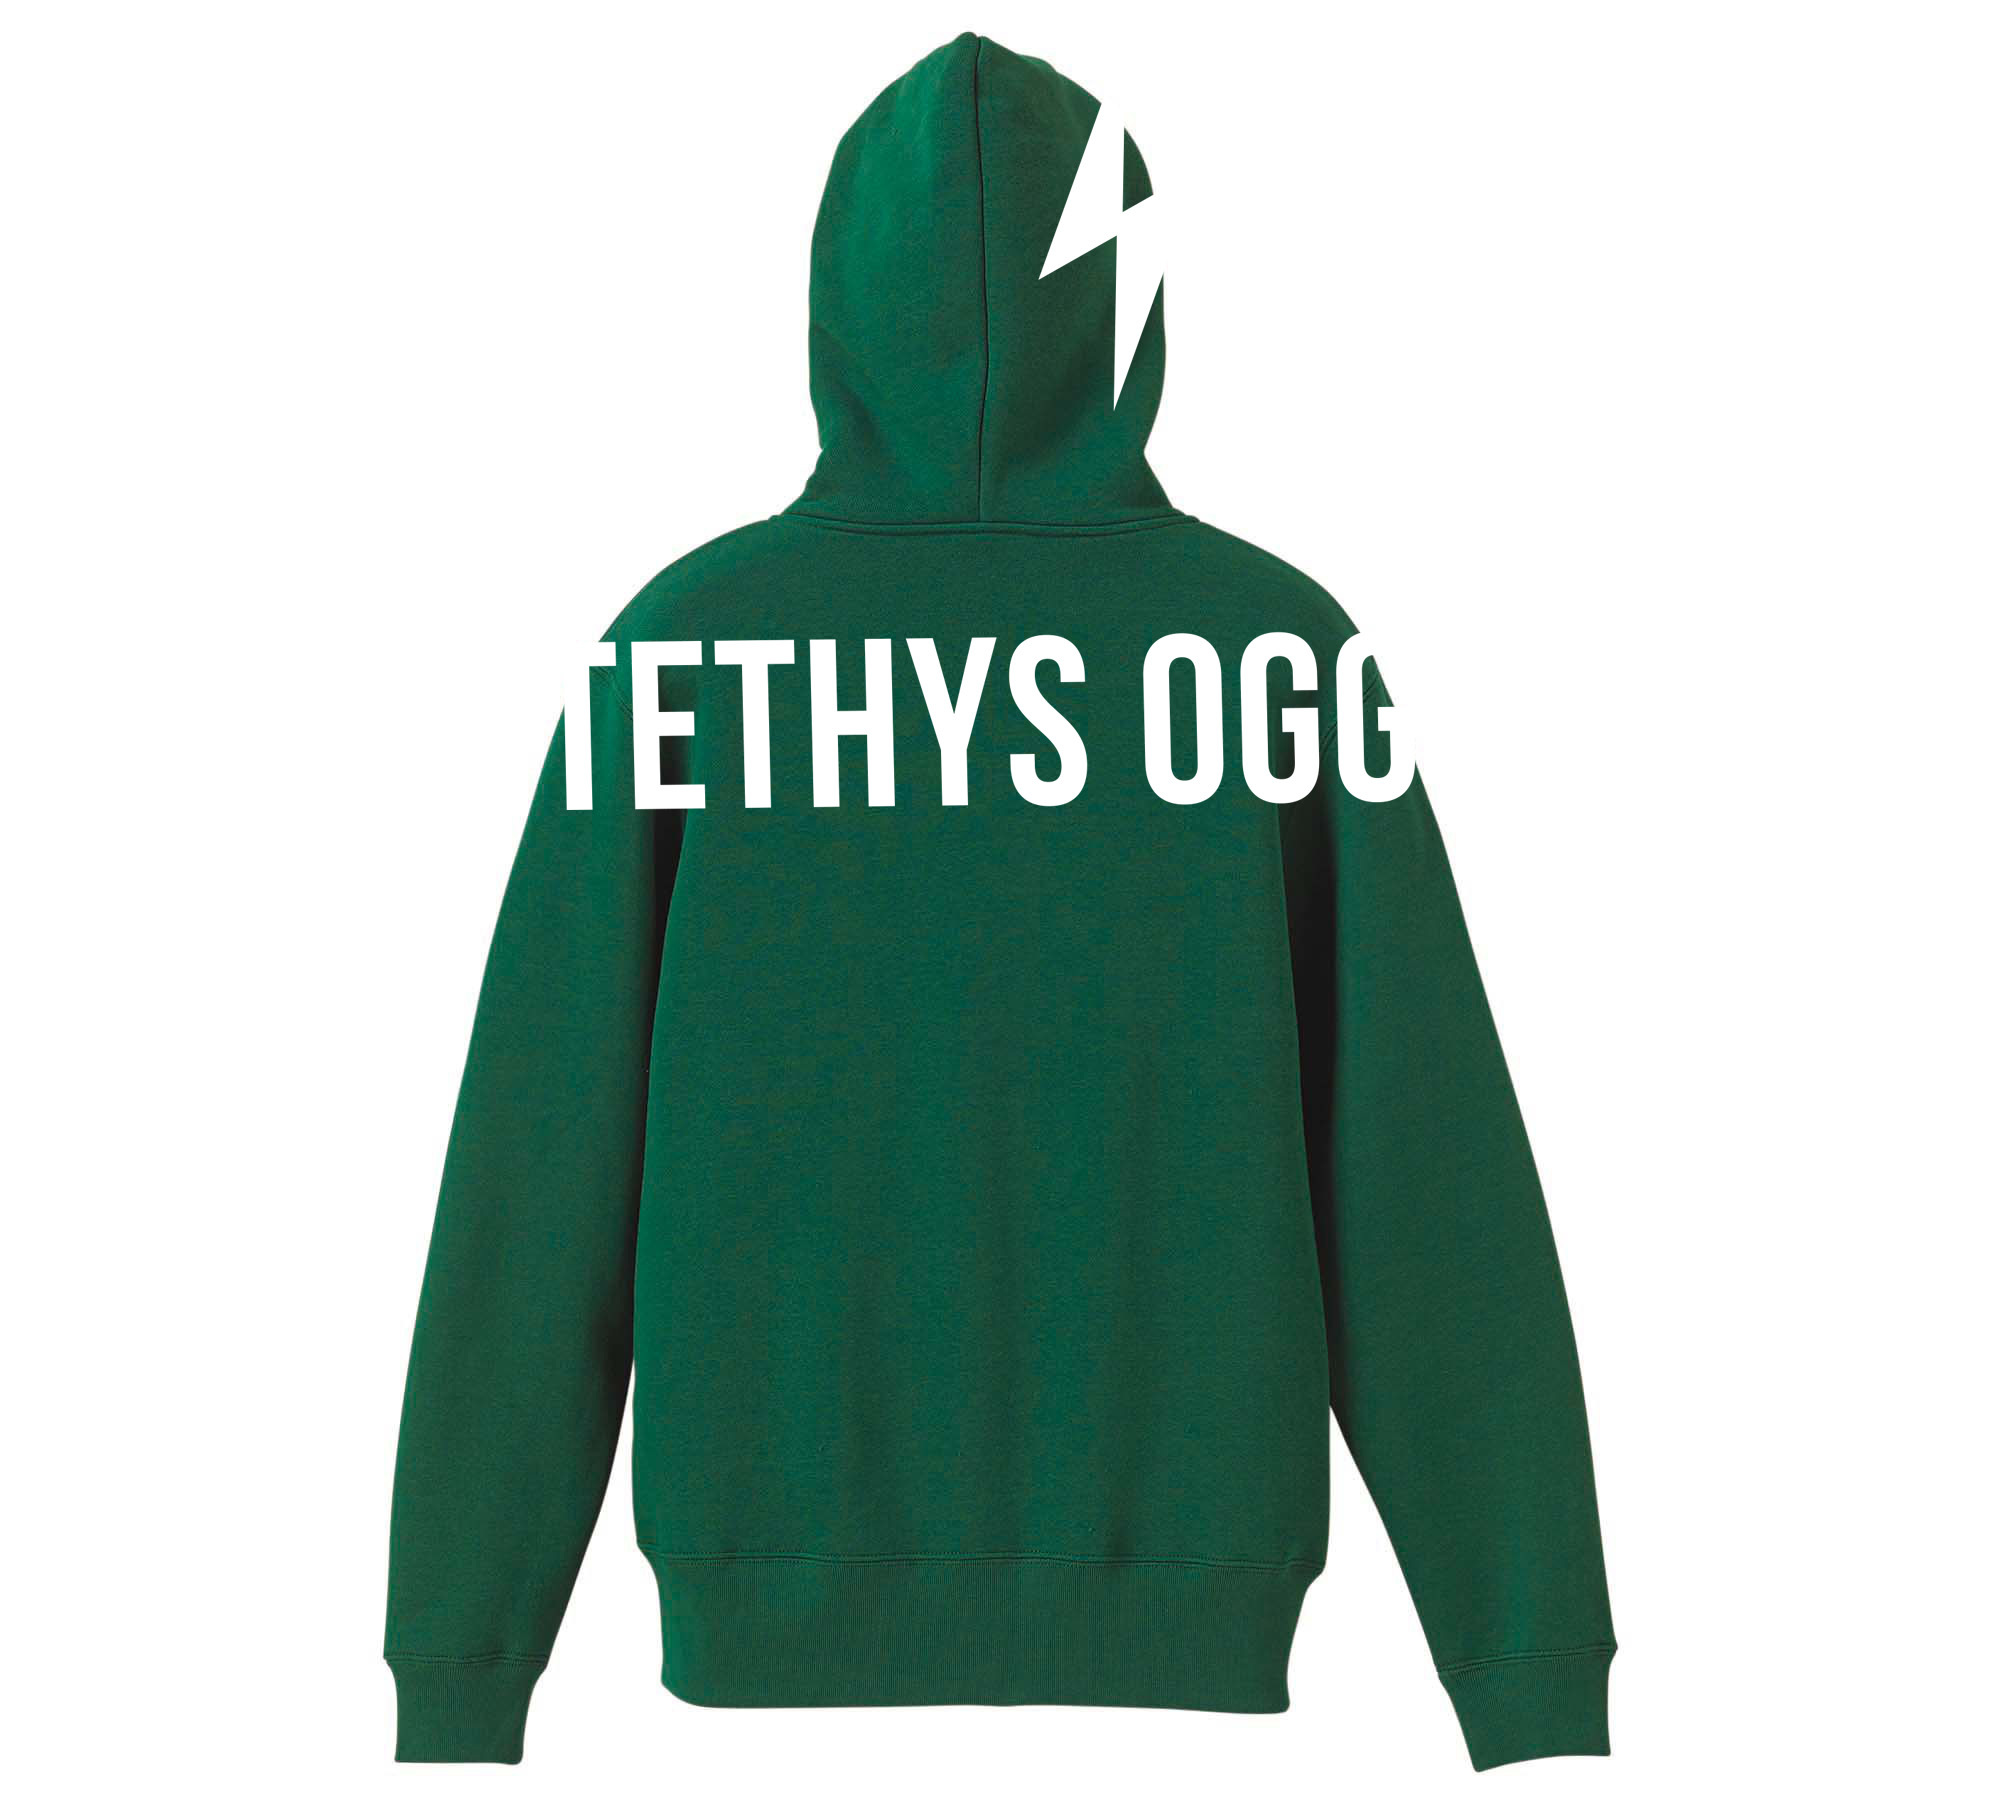 Tethys Ogg ビッグロゴ フルジップ パーカ アイビーグリーン Tethys Ogg